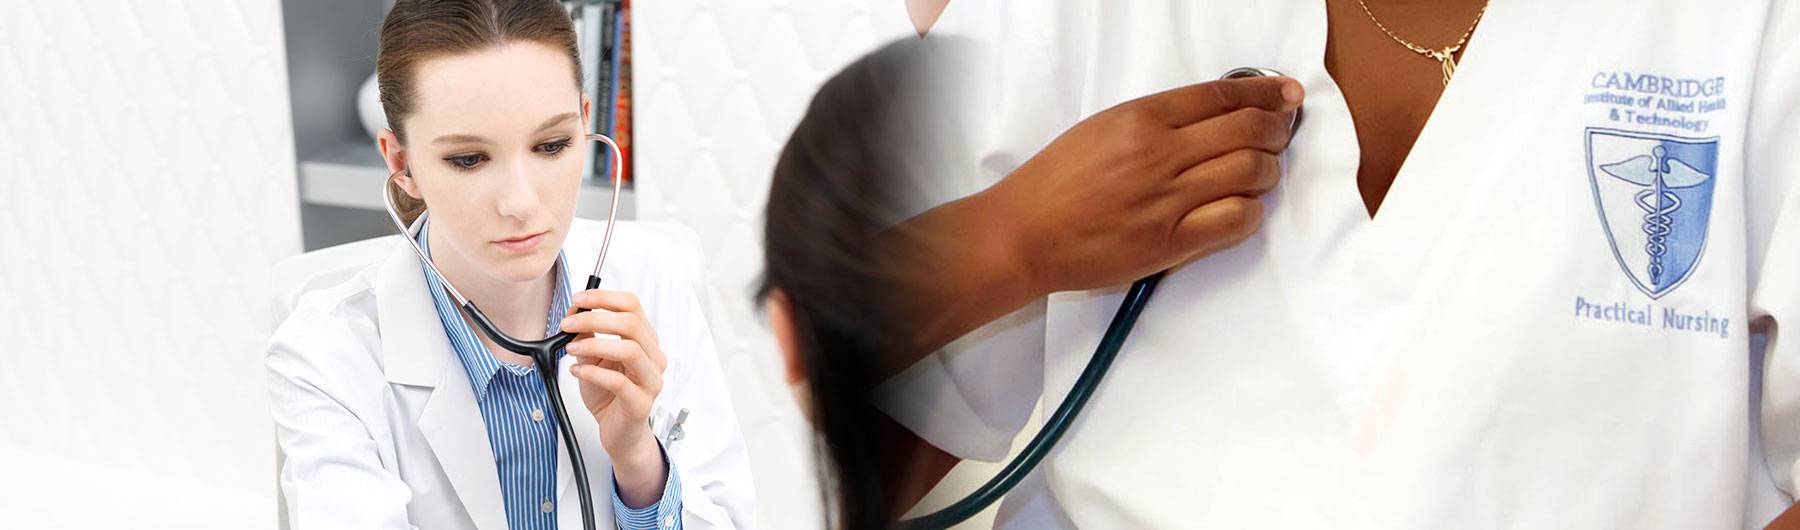 female patient care technician using stethoscope